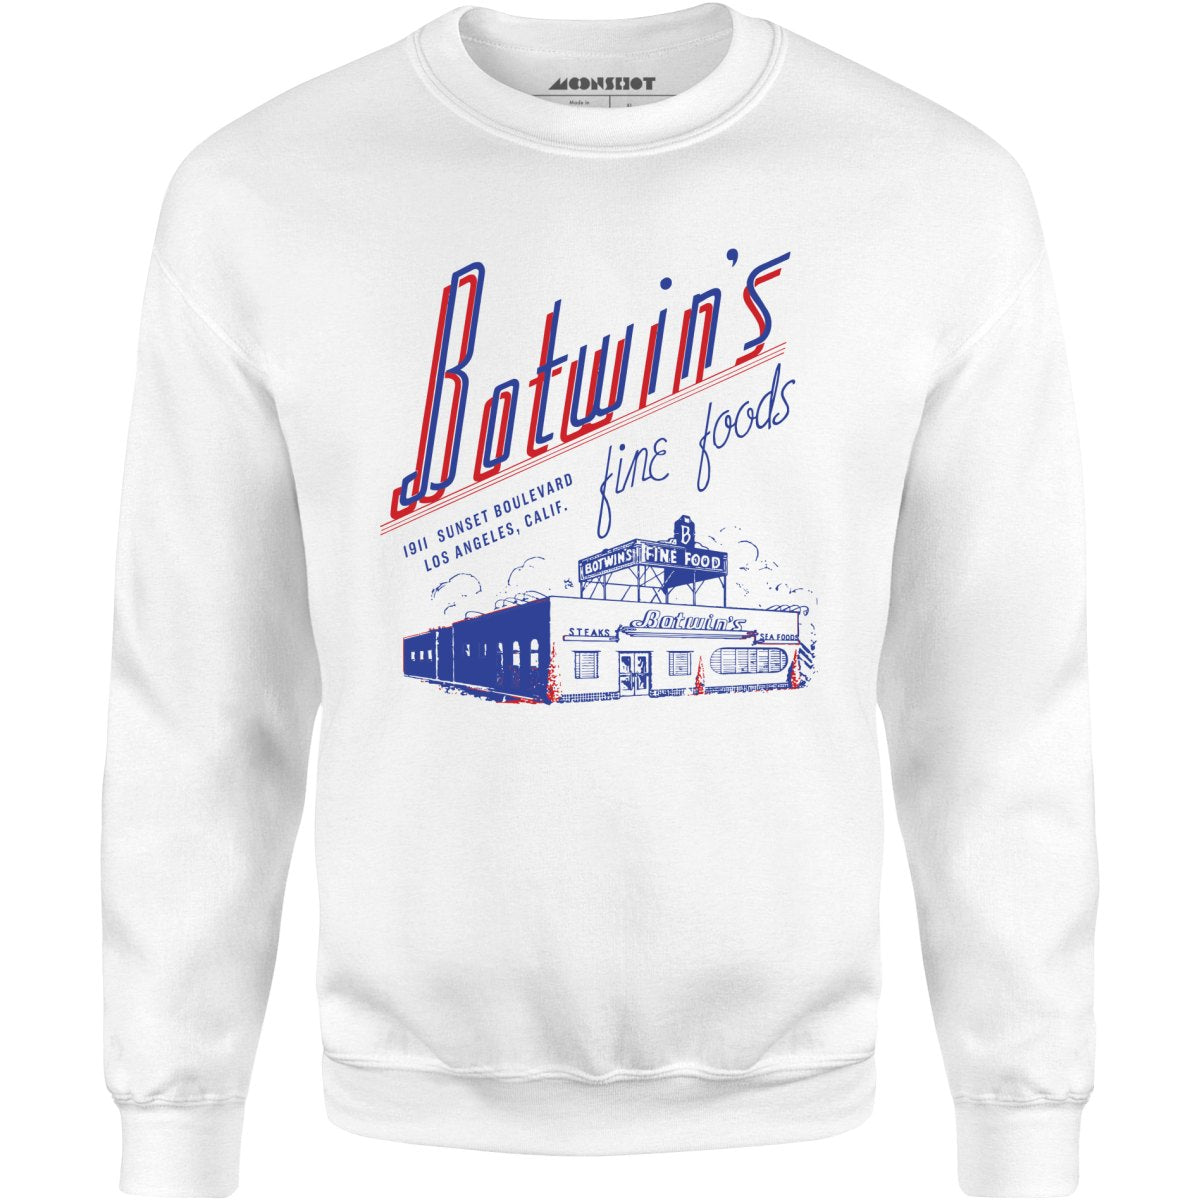 Botwin's Cafe v2 - Los Angeles, CA - Vintage Restaurant - Unisex Sweatshirt